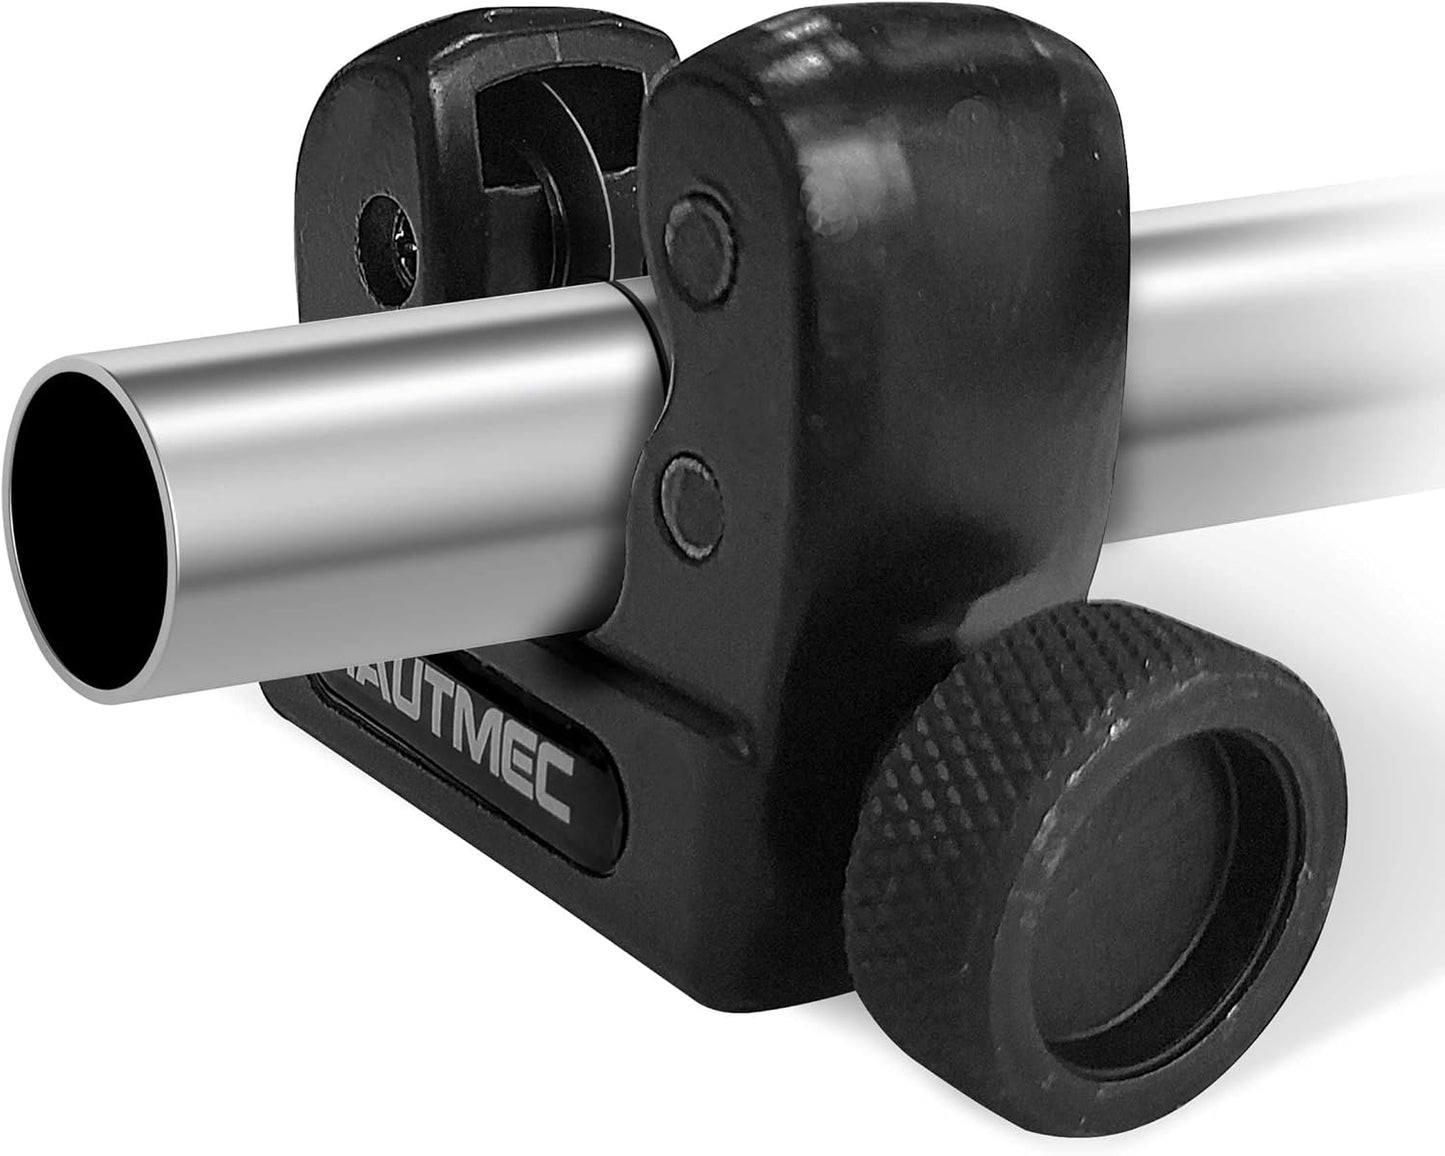 Hautmec Pro Compact Heavy Duty Mini Tube Cutter, 1/8" to 1-1/8" OD (3-30mm) Tubing Cutter, Heavy Duty Pipe Cutter for PVC, Copper, Aluminum, and Thin Stainless Steel Tube HT0133-TC